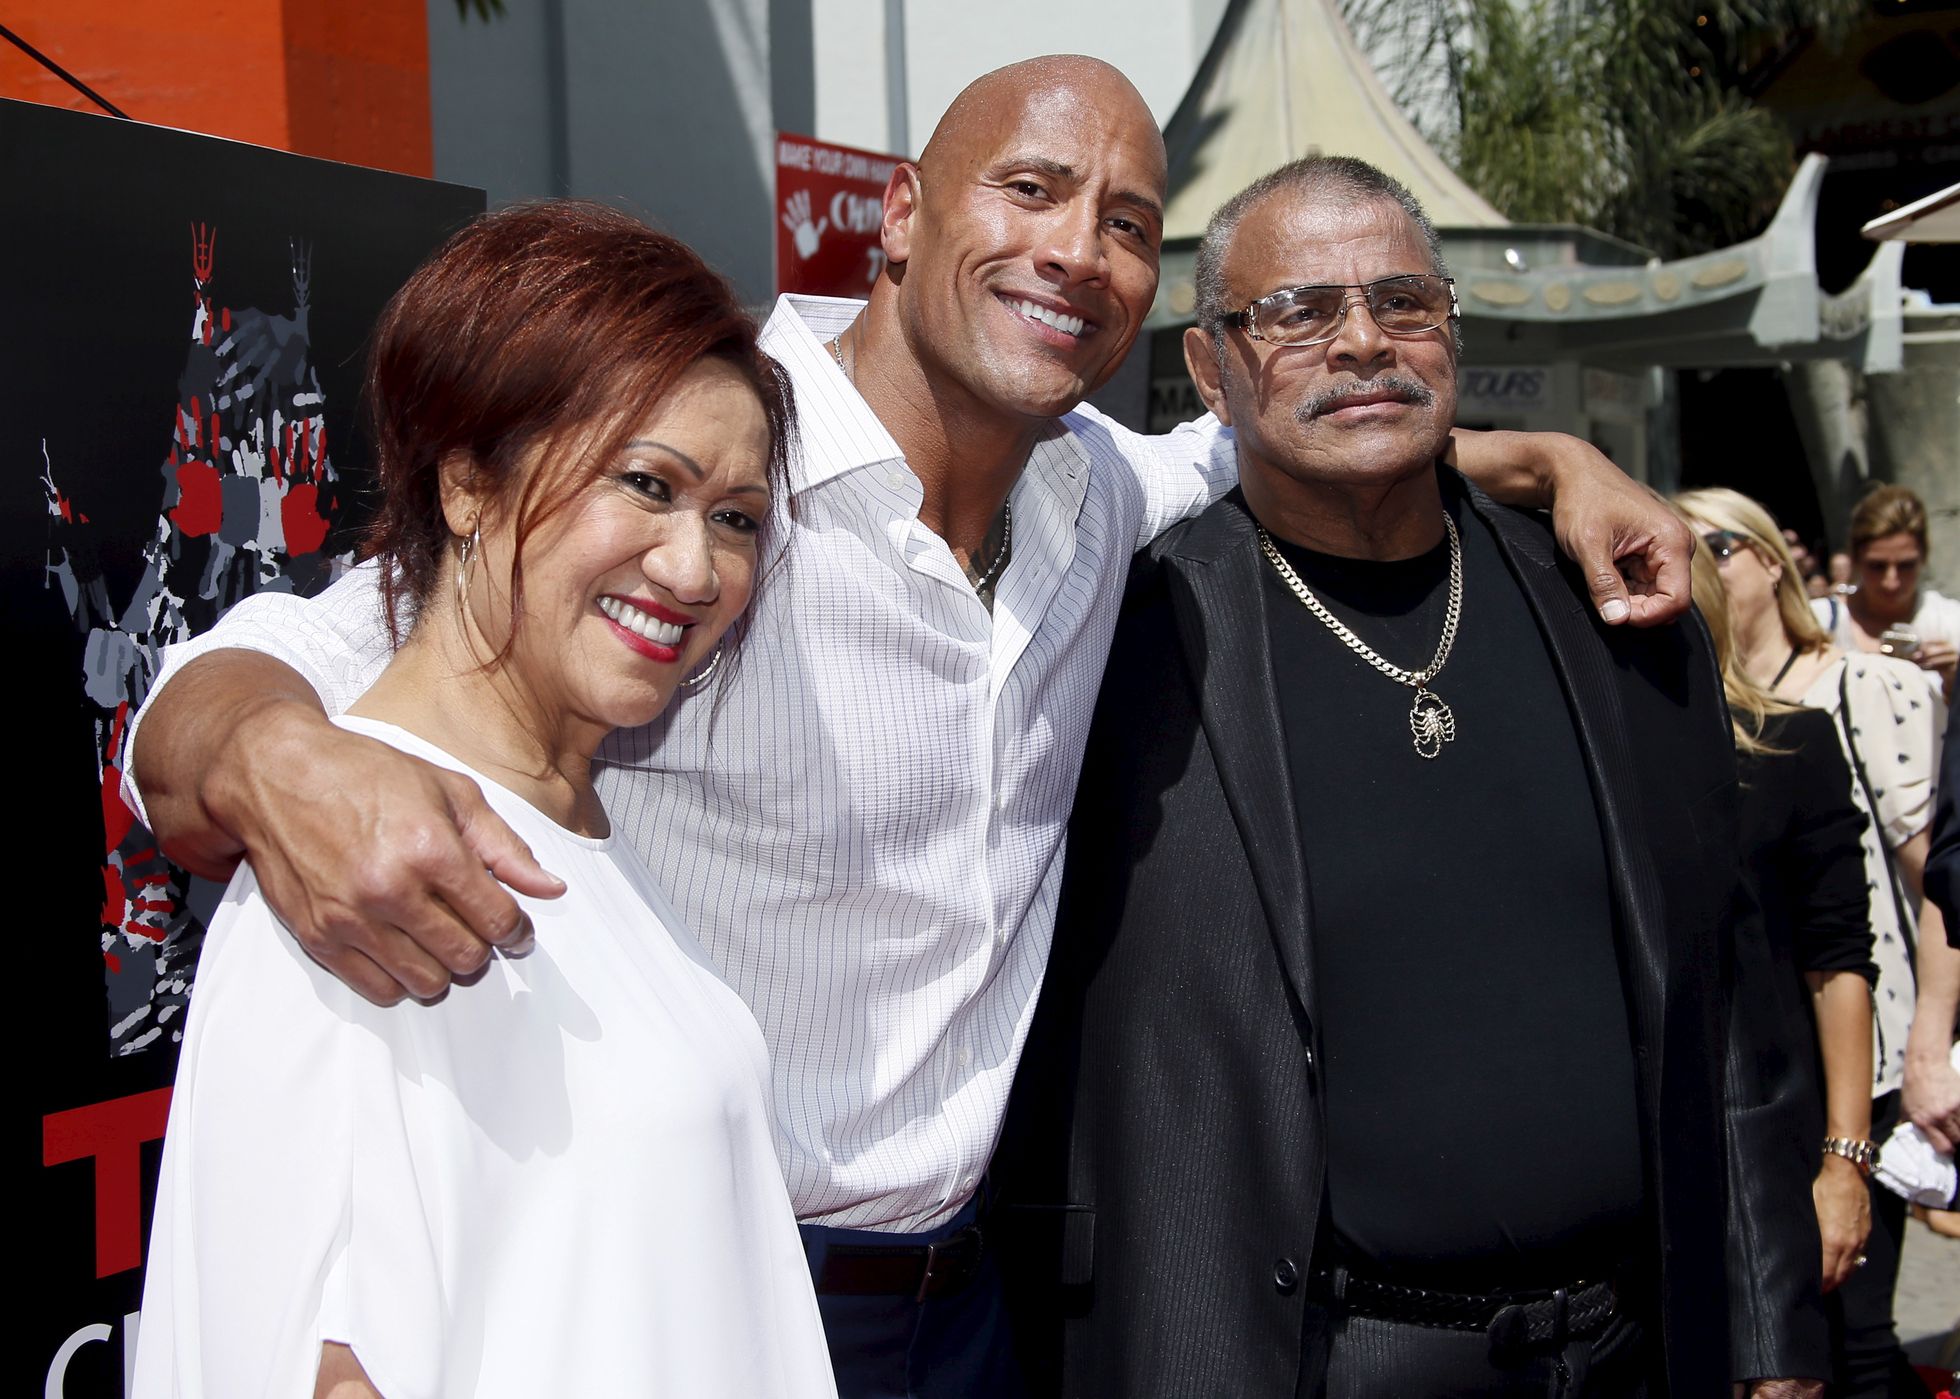 Dwayne «The Rock» Johnson poseerimas oma ema Ata ning isa Rockyga 2015. aasta mais.